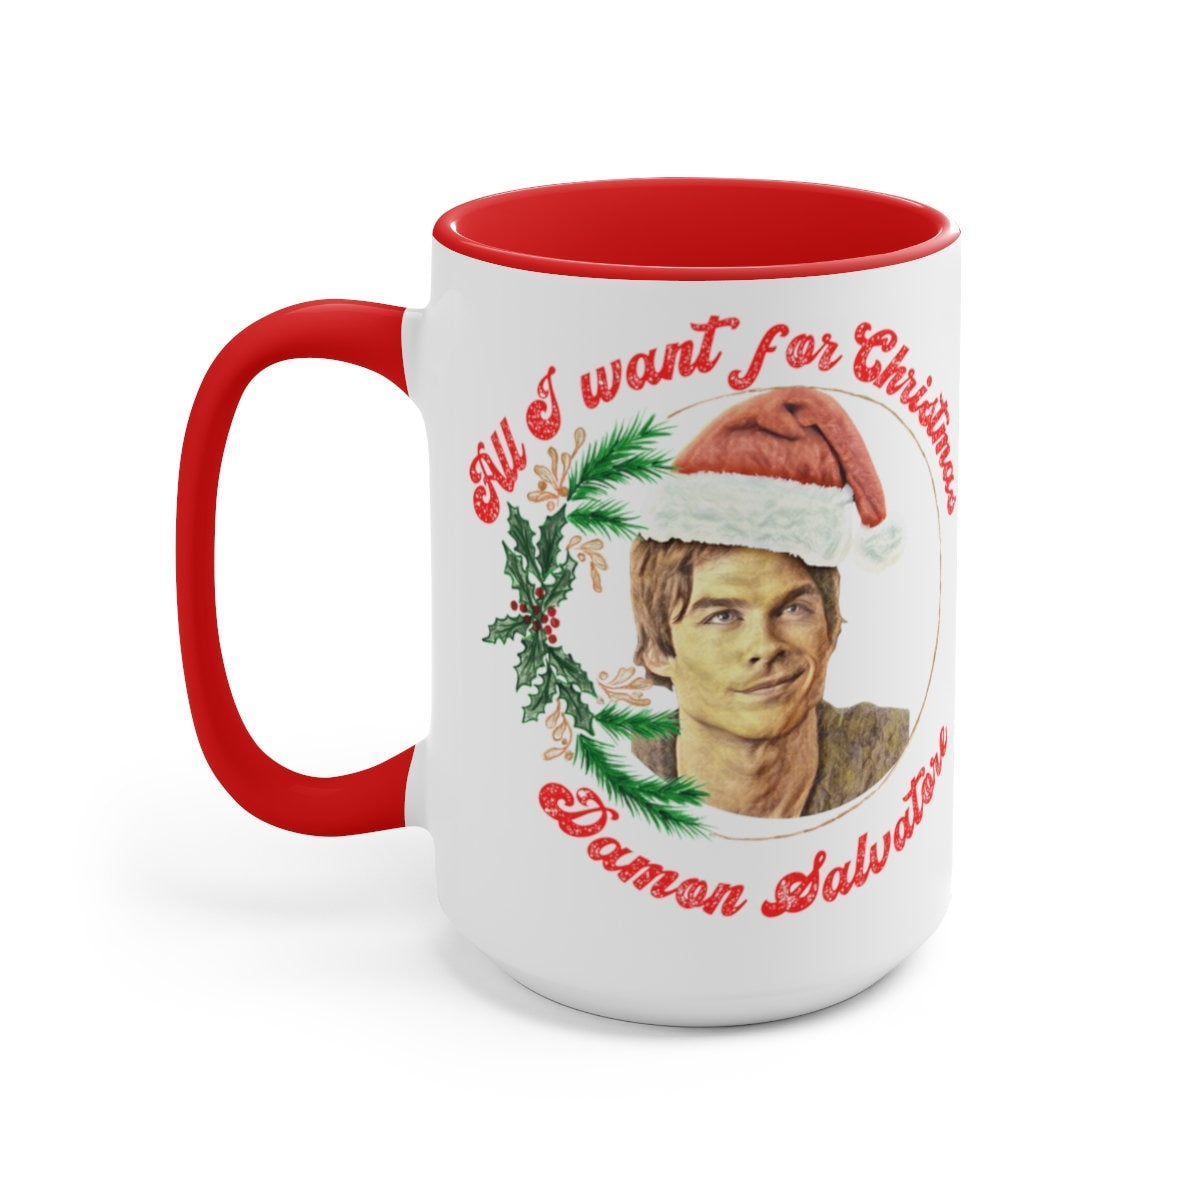 Damon Salvatore Mug, Damon Salvatore Xmas Mug, All I want for Christmas is Damon Salvatore, TVD Fan gift, TVD Mug, Salvatore Brot